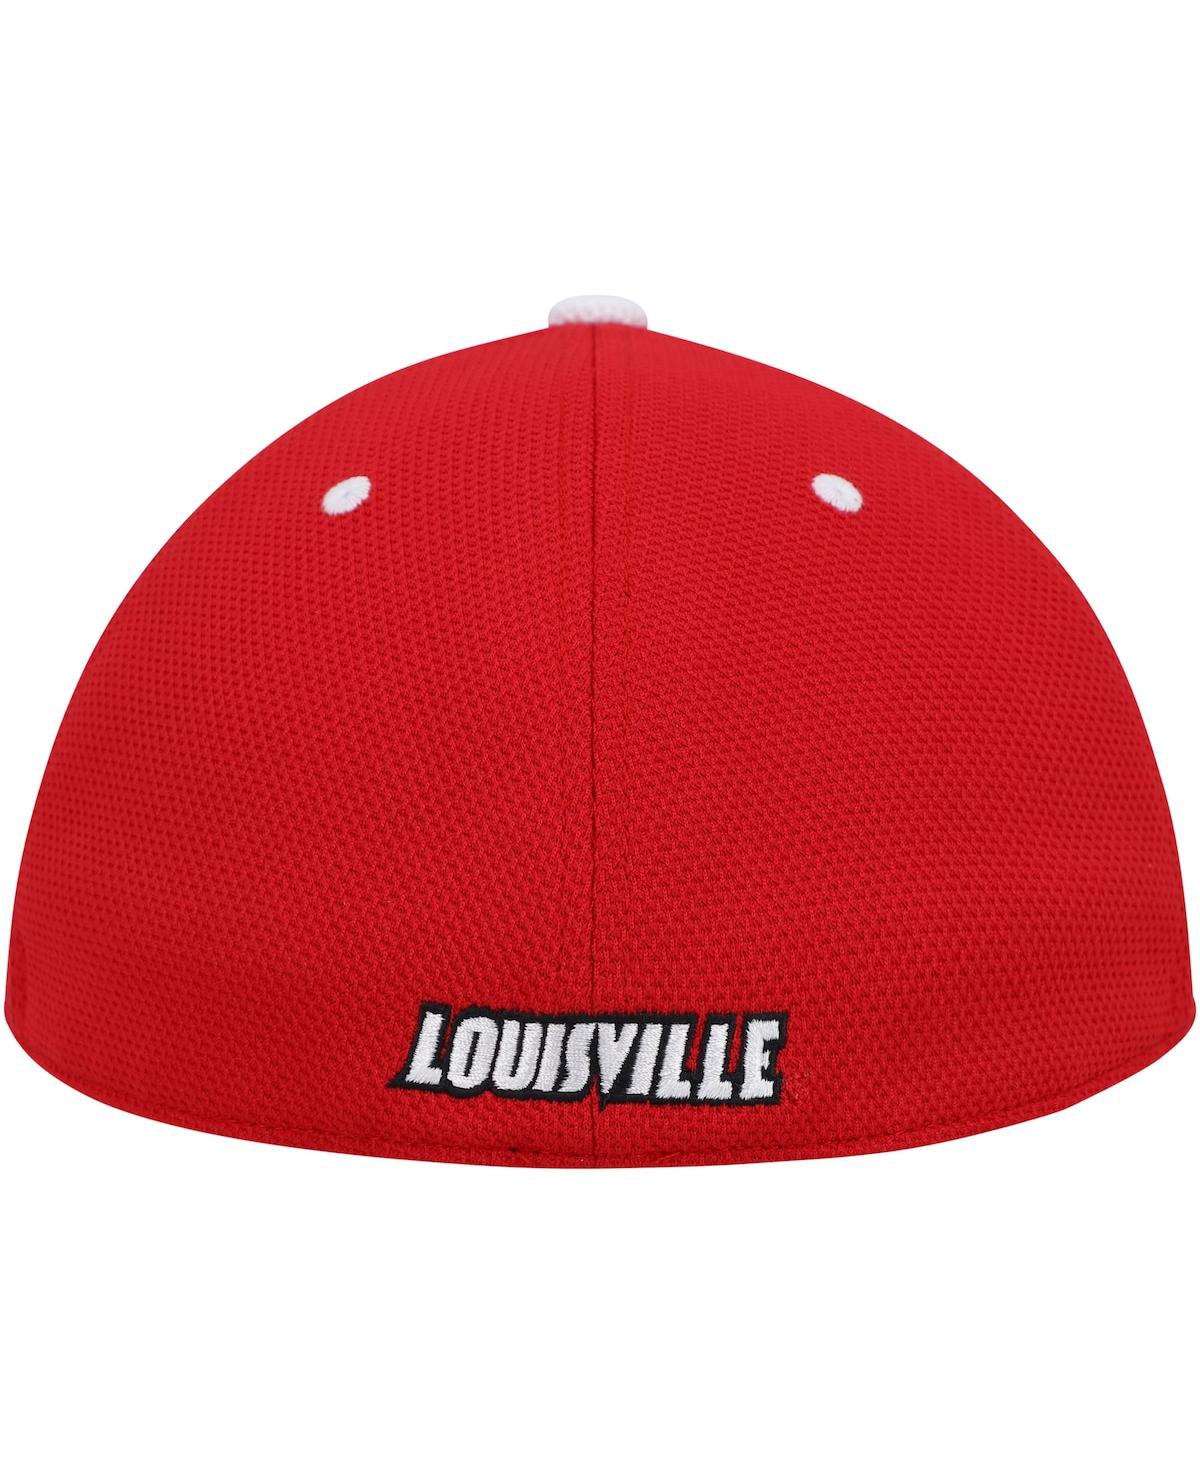 Shop Adidas Originals Men's Adidas Red Louisville Cardinals On-field Baseball Fitted Hat